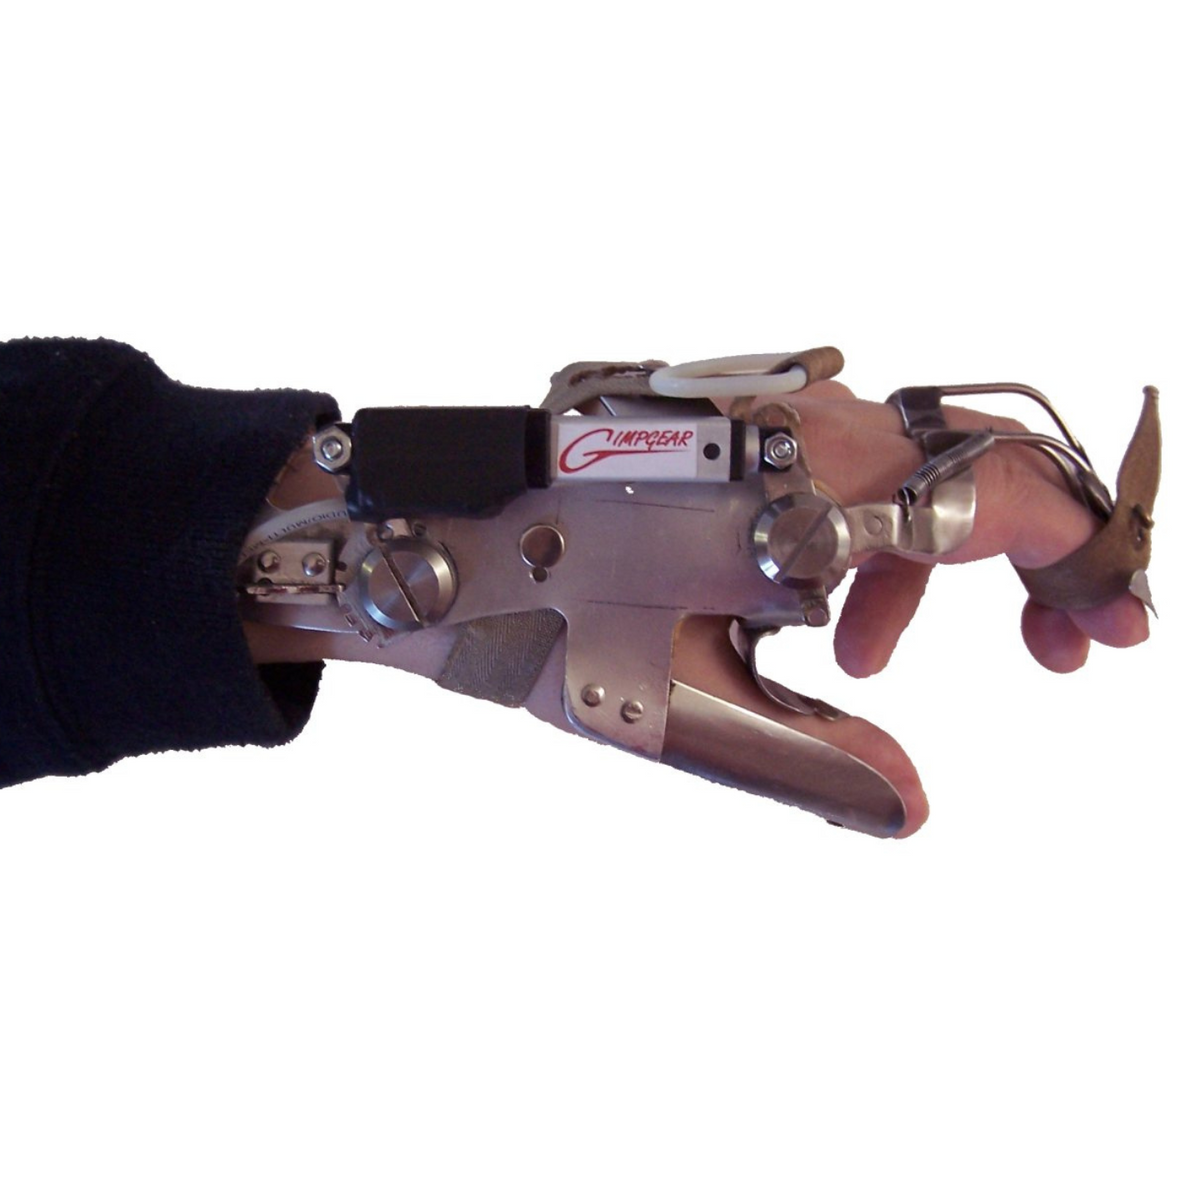 PowerGrip Orthosis - Powered Grepp Exoskeleton Glove